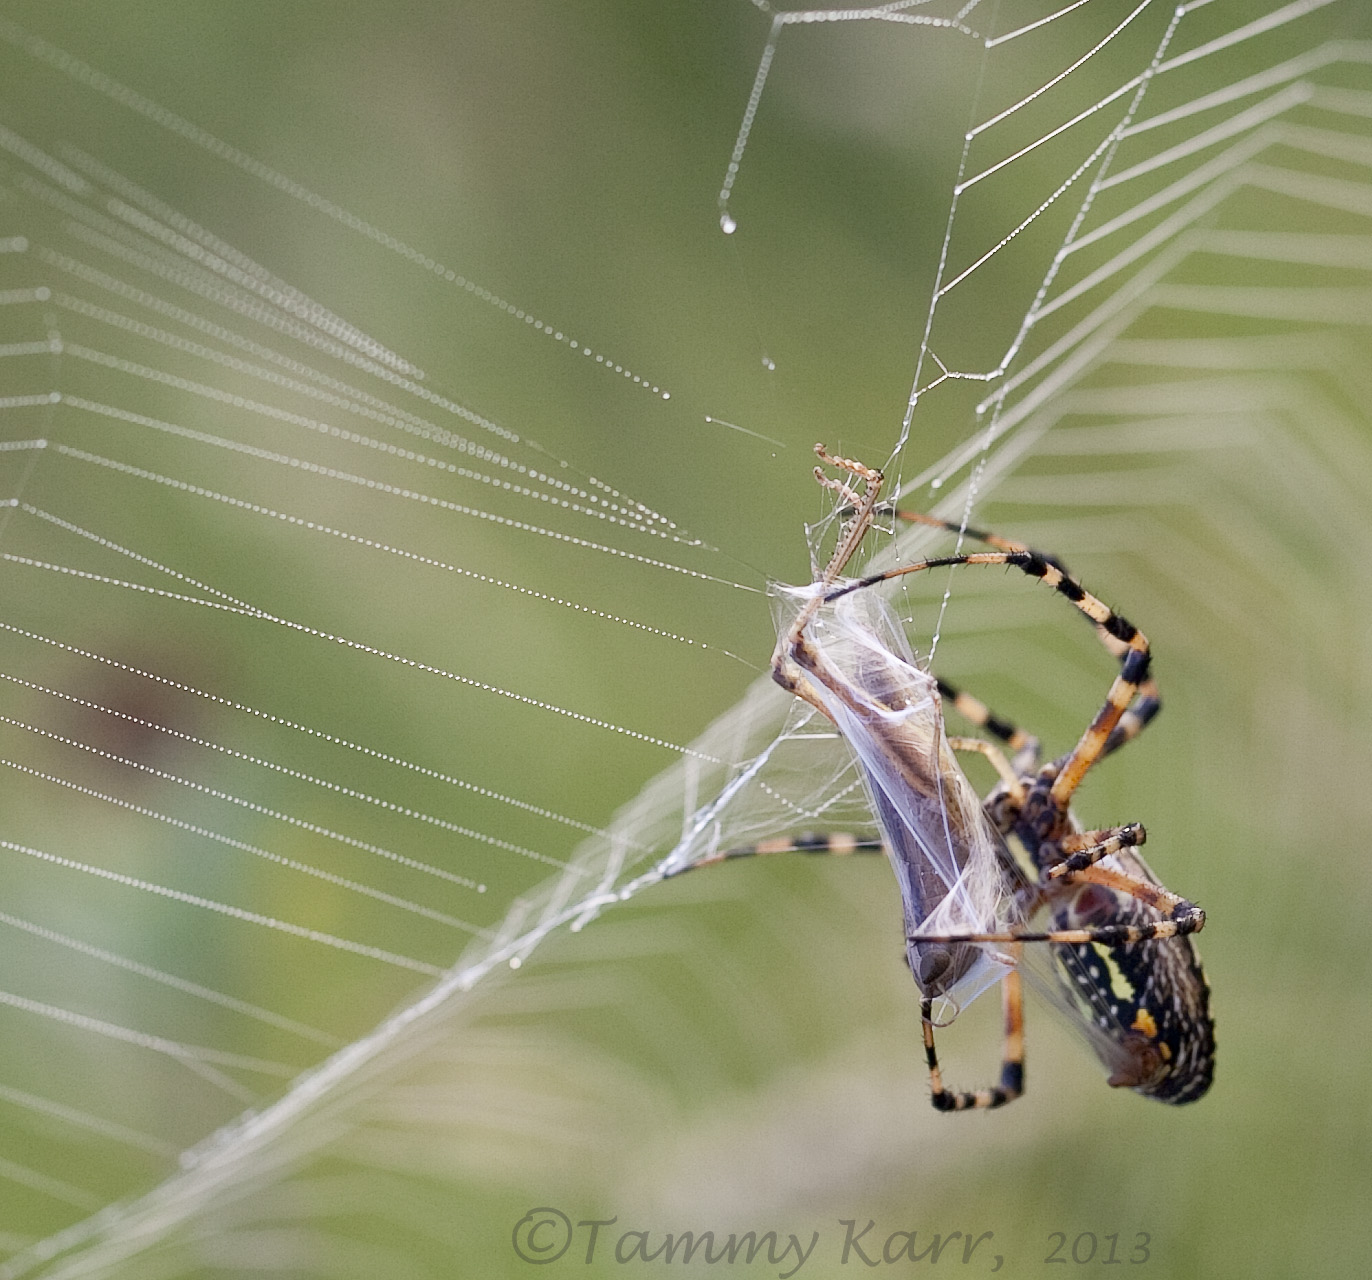 Spider Argyope Lobata in the spider web, hiker observes wasp